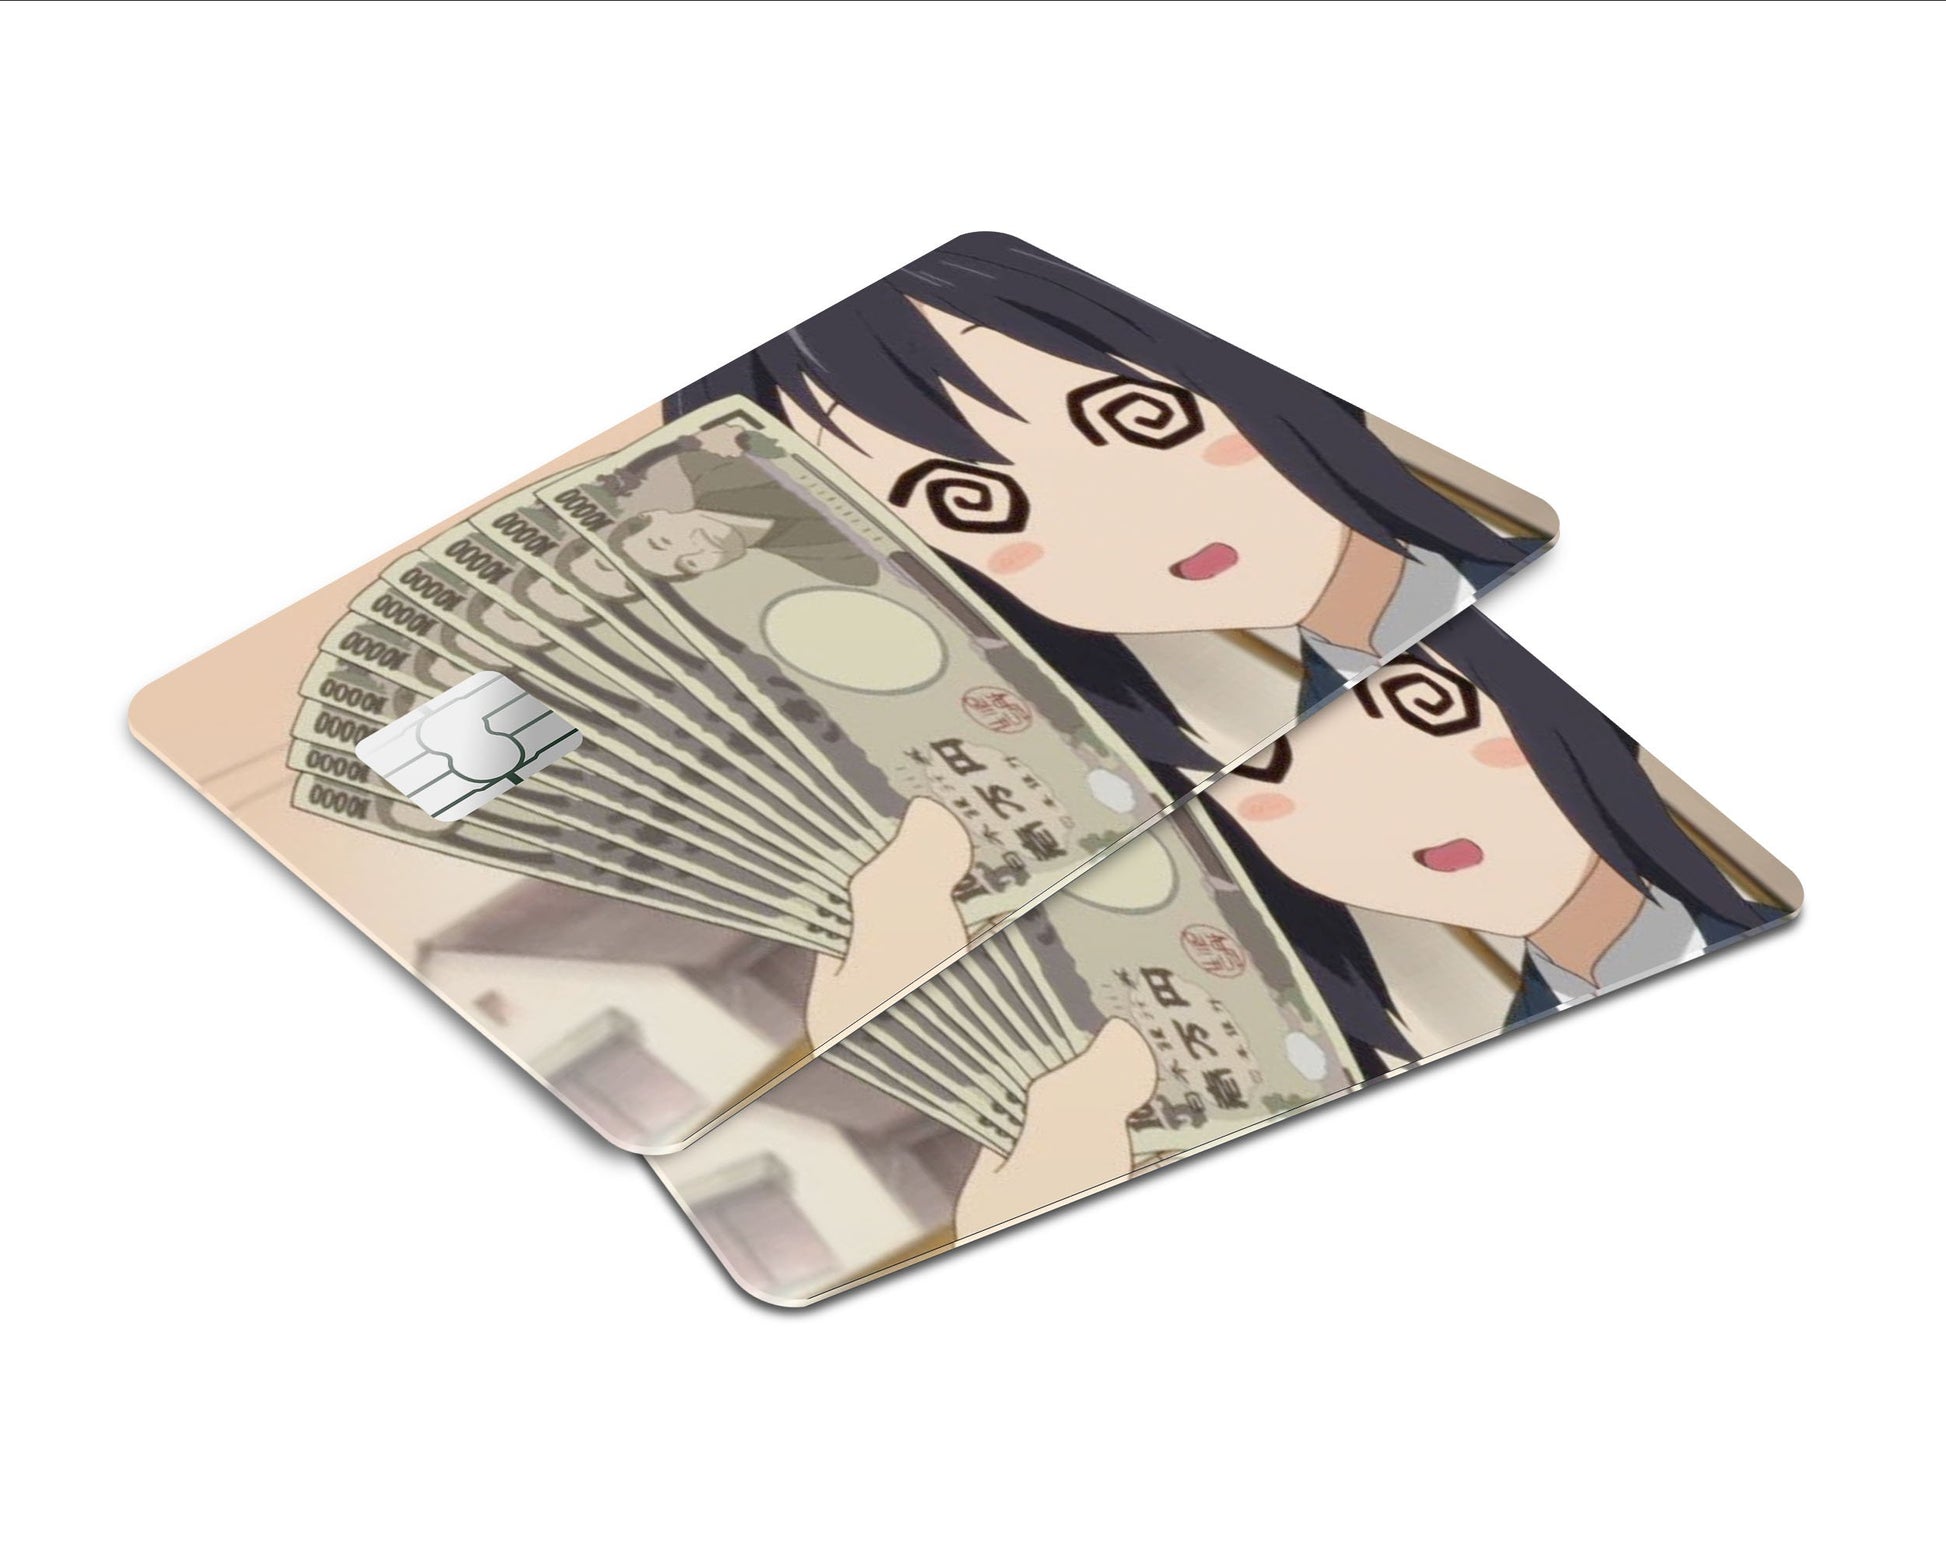 Yu-Gi-Oh Exodia Credit Card Skin - Shut Up And Take My Yen